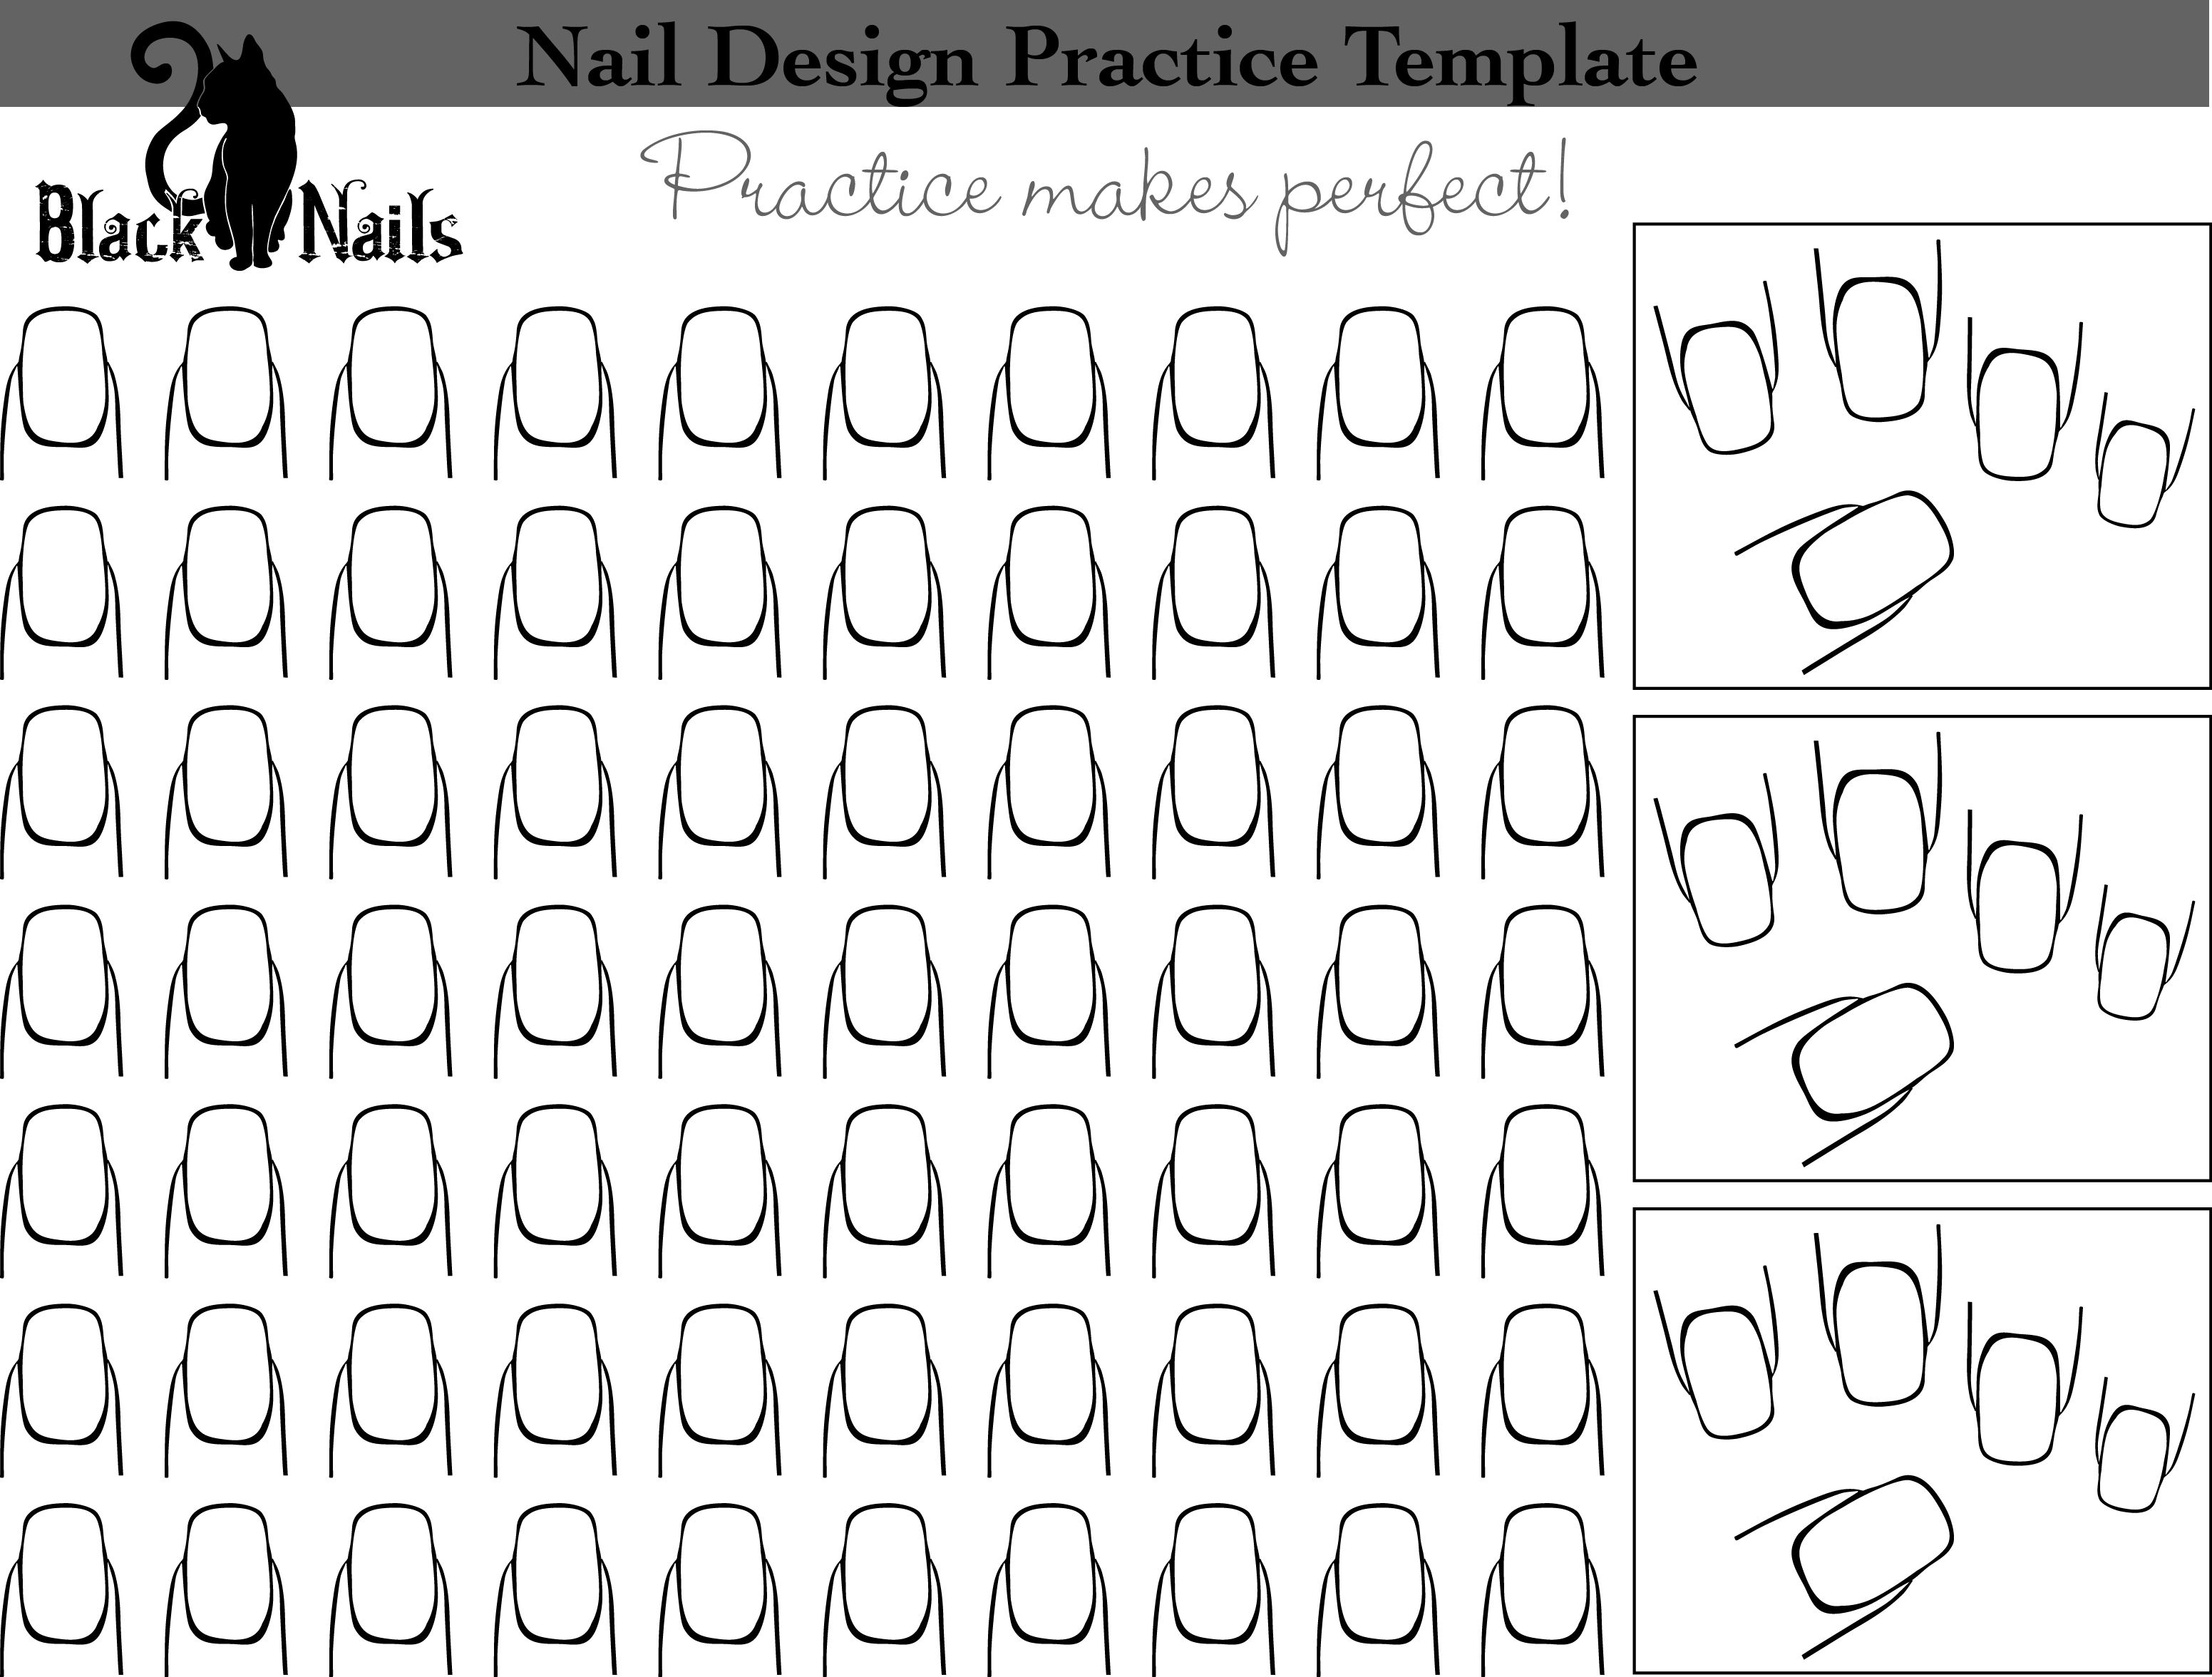 Nail Art Design Practice Templates Or Sheets - All Versions | Black - Free Printable Nail Art Designs